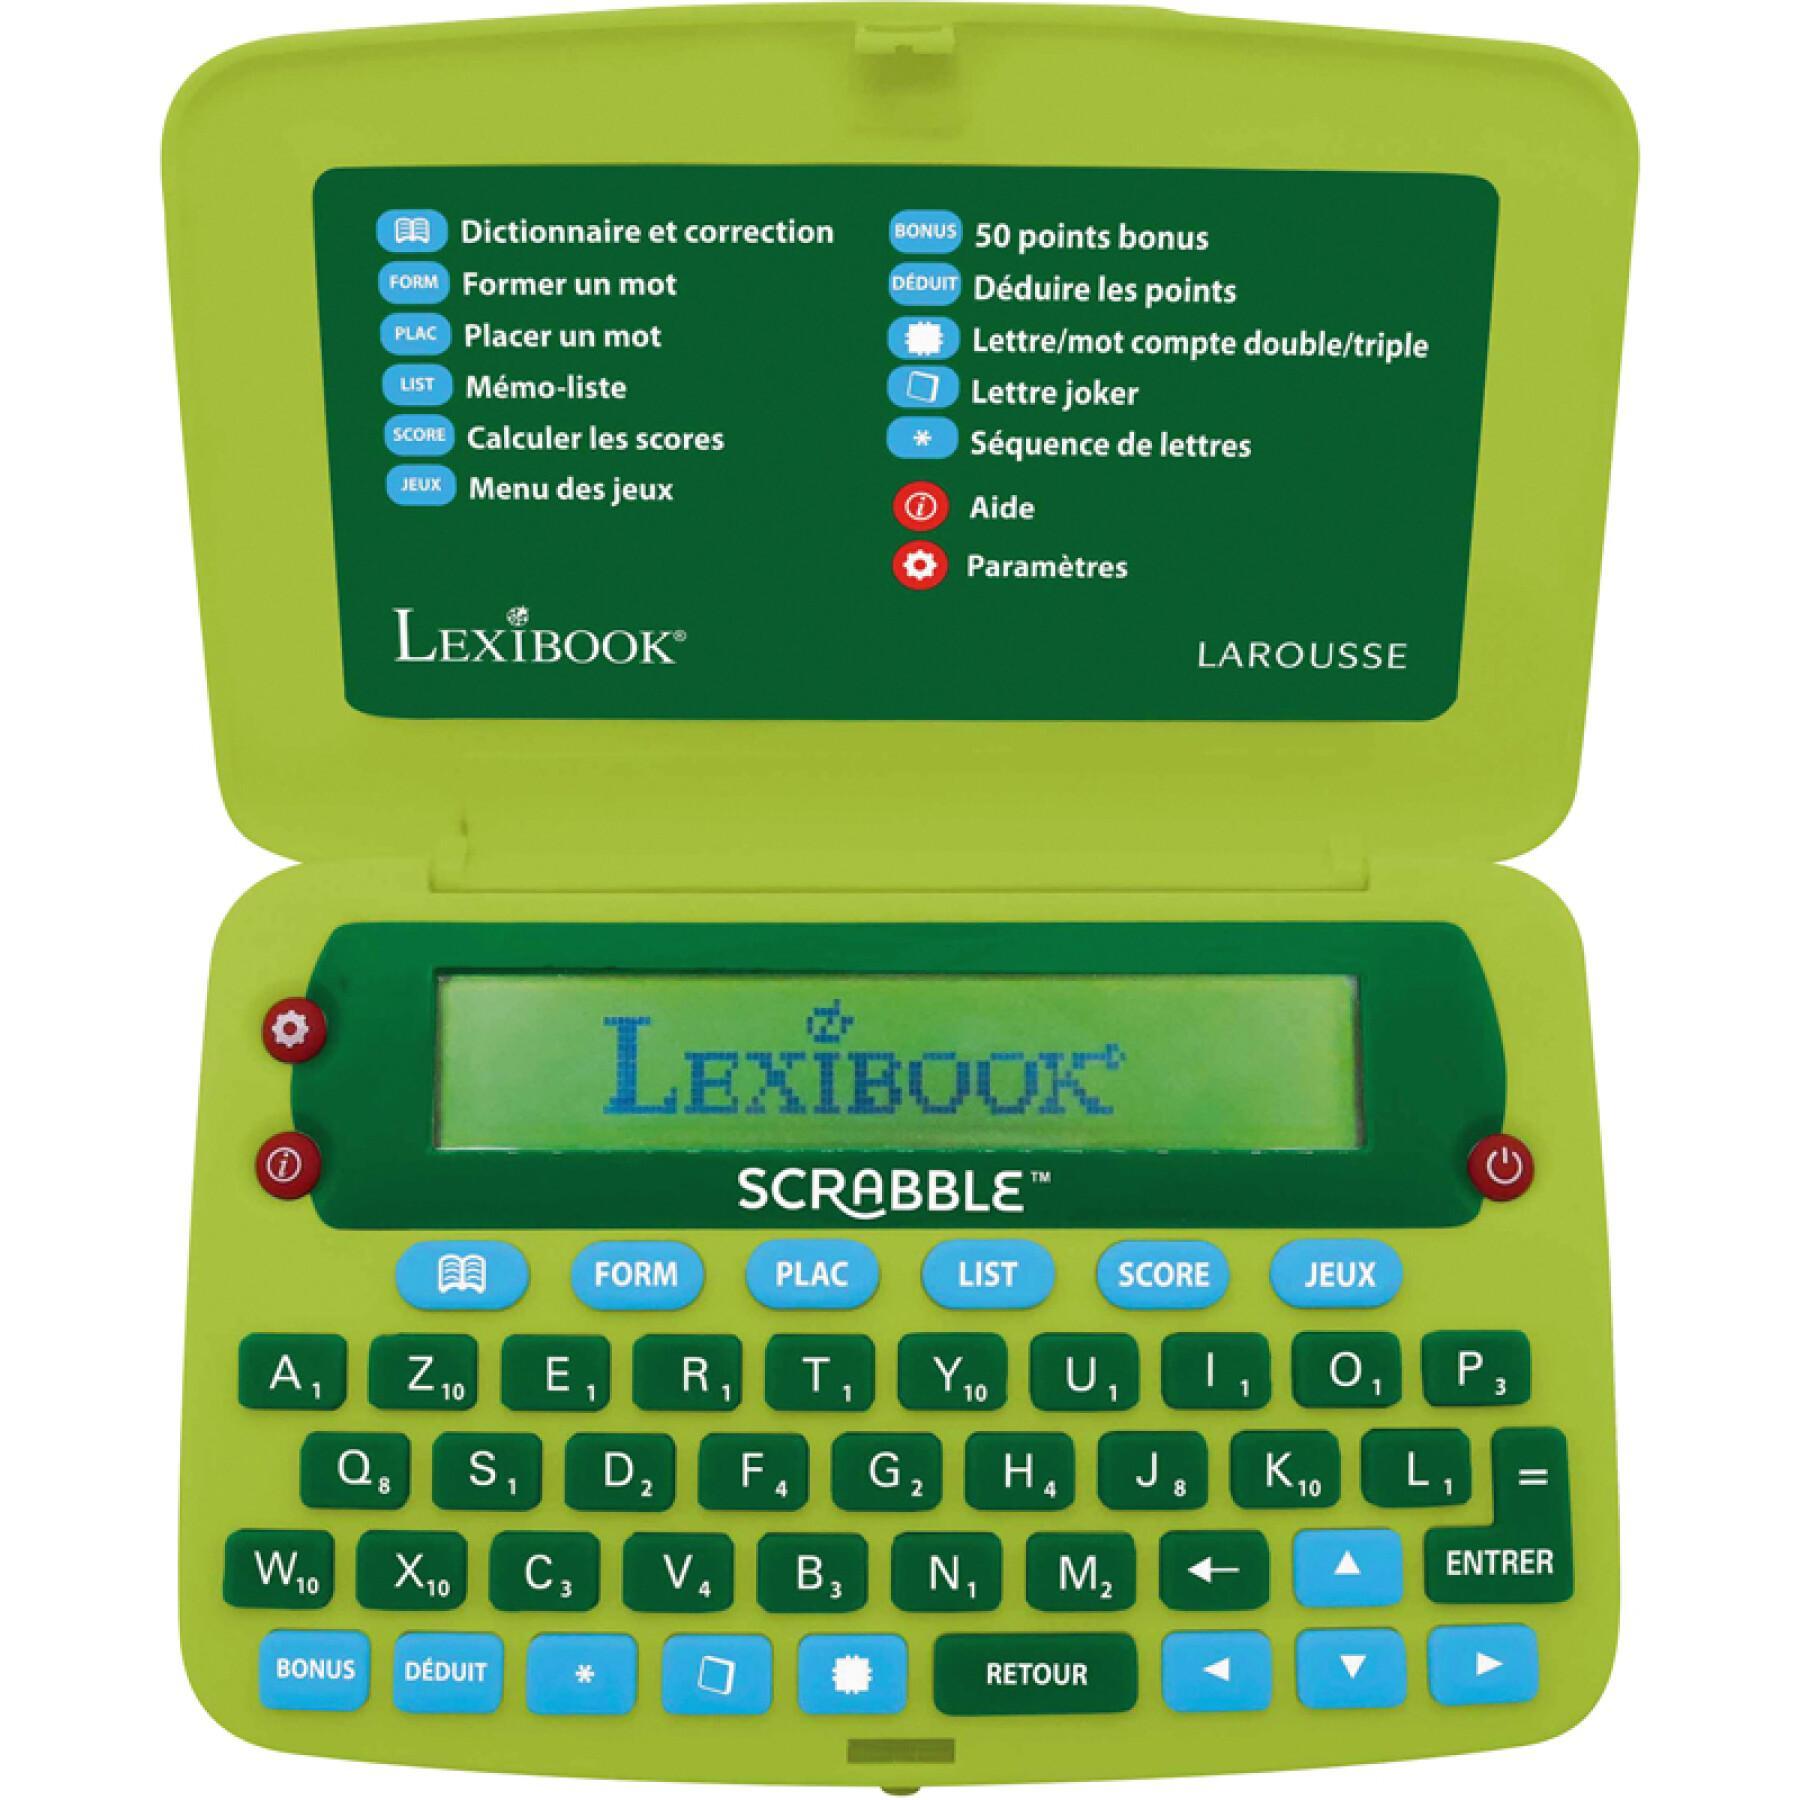 Scrabble electronic dictionary Lexibook